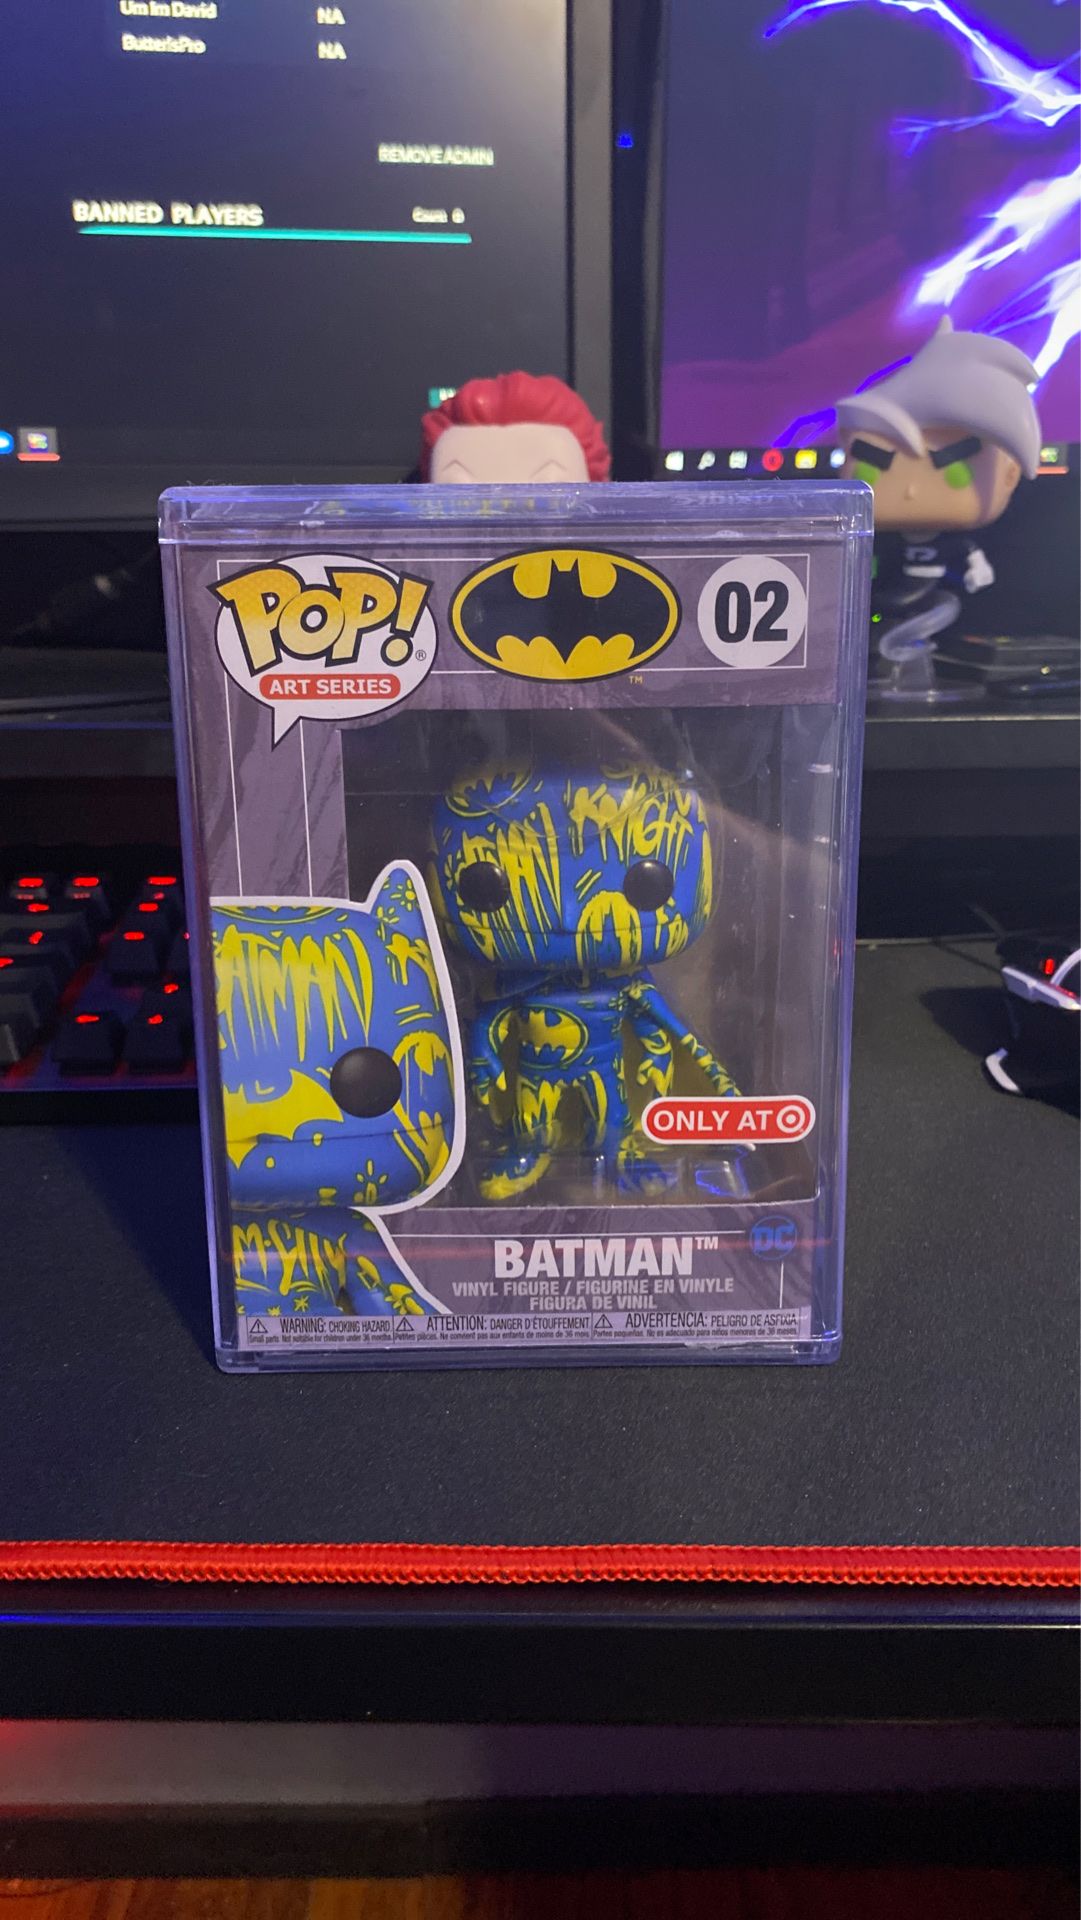 Batman Art series (blue and yellow)